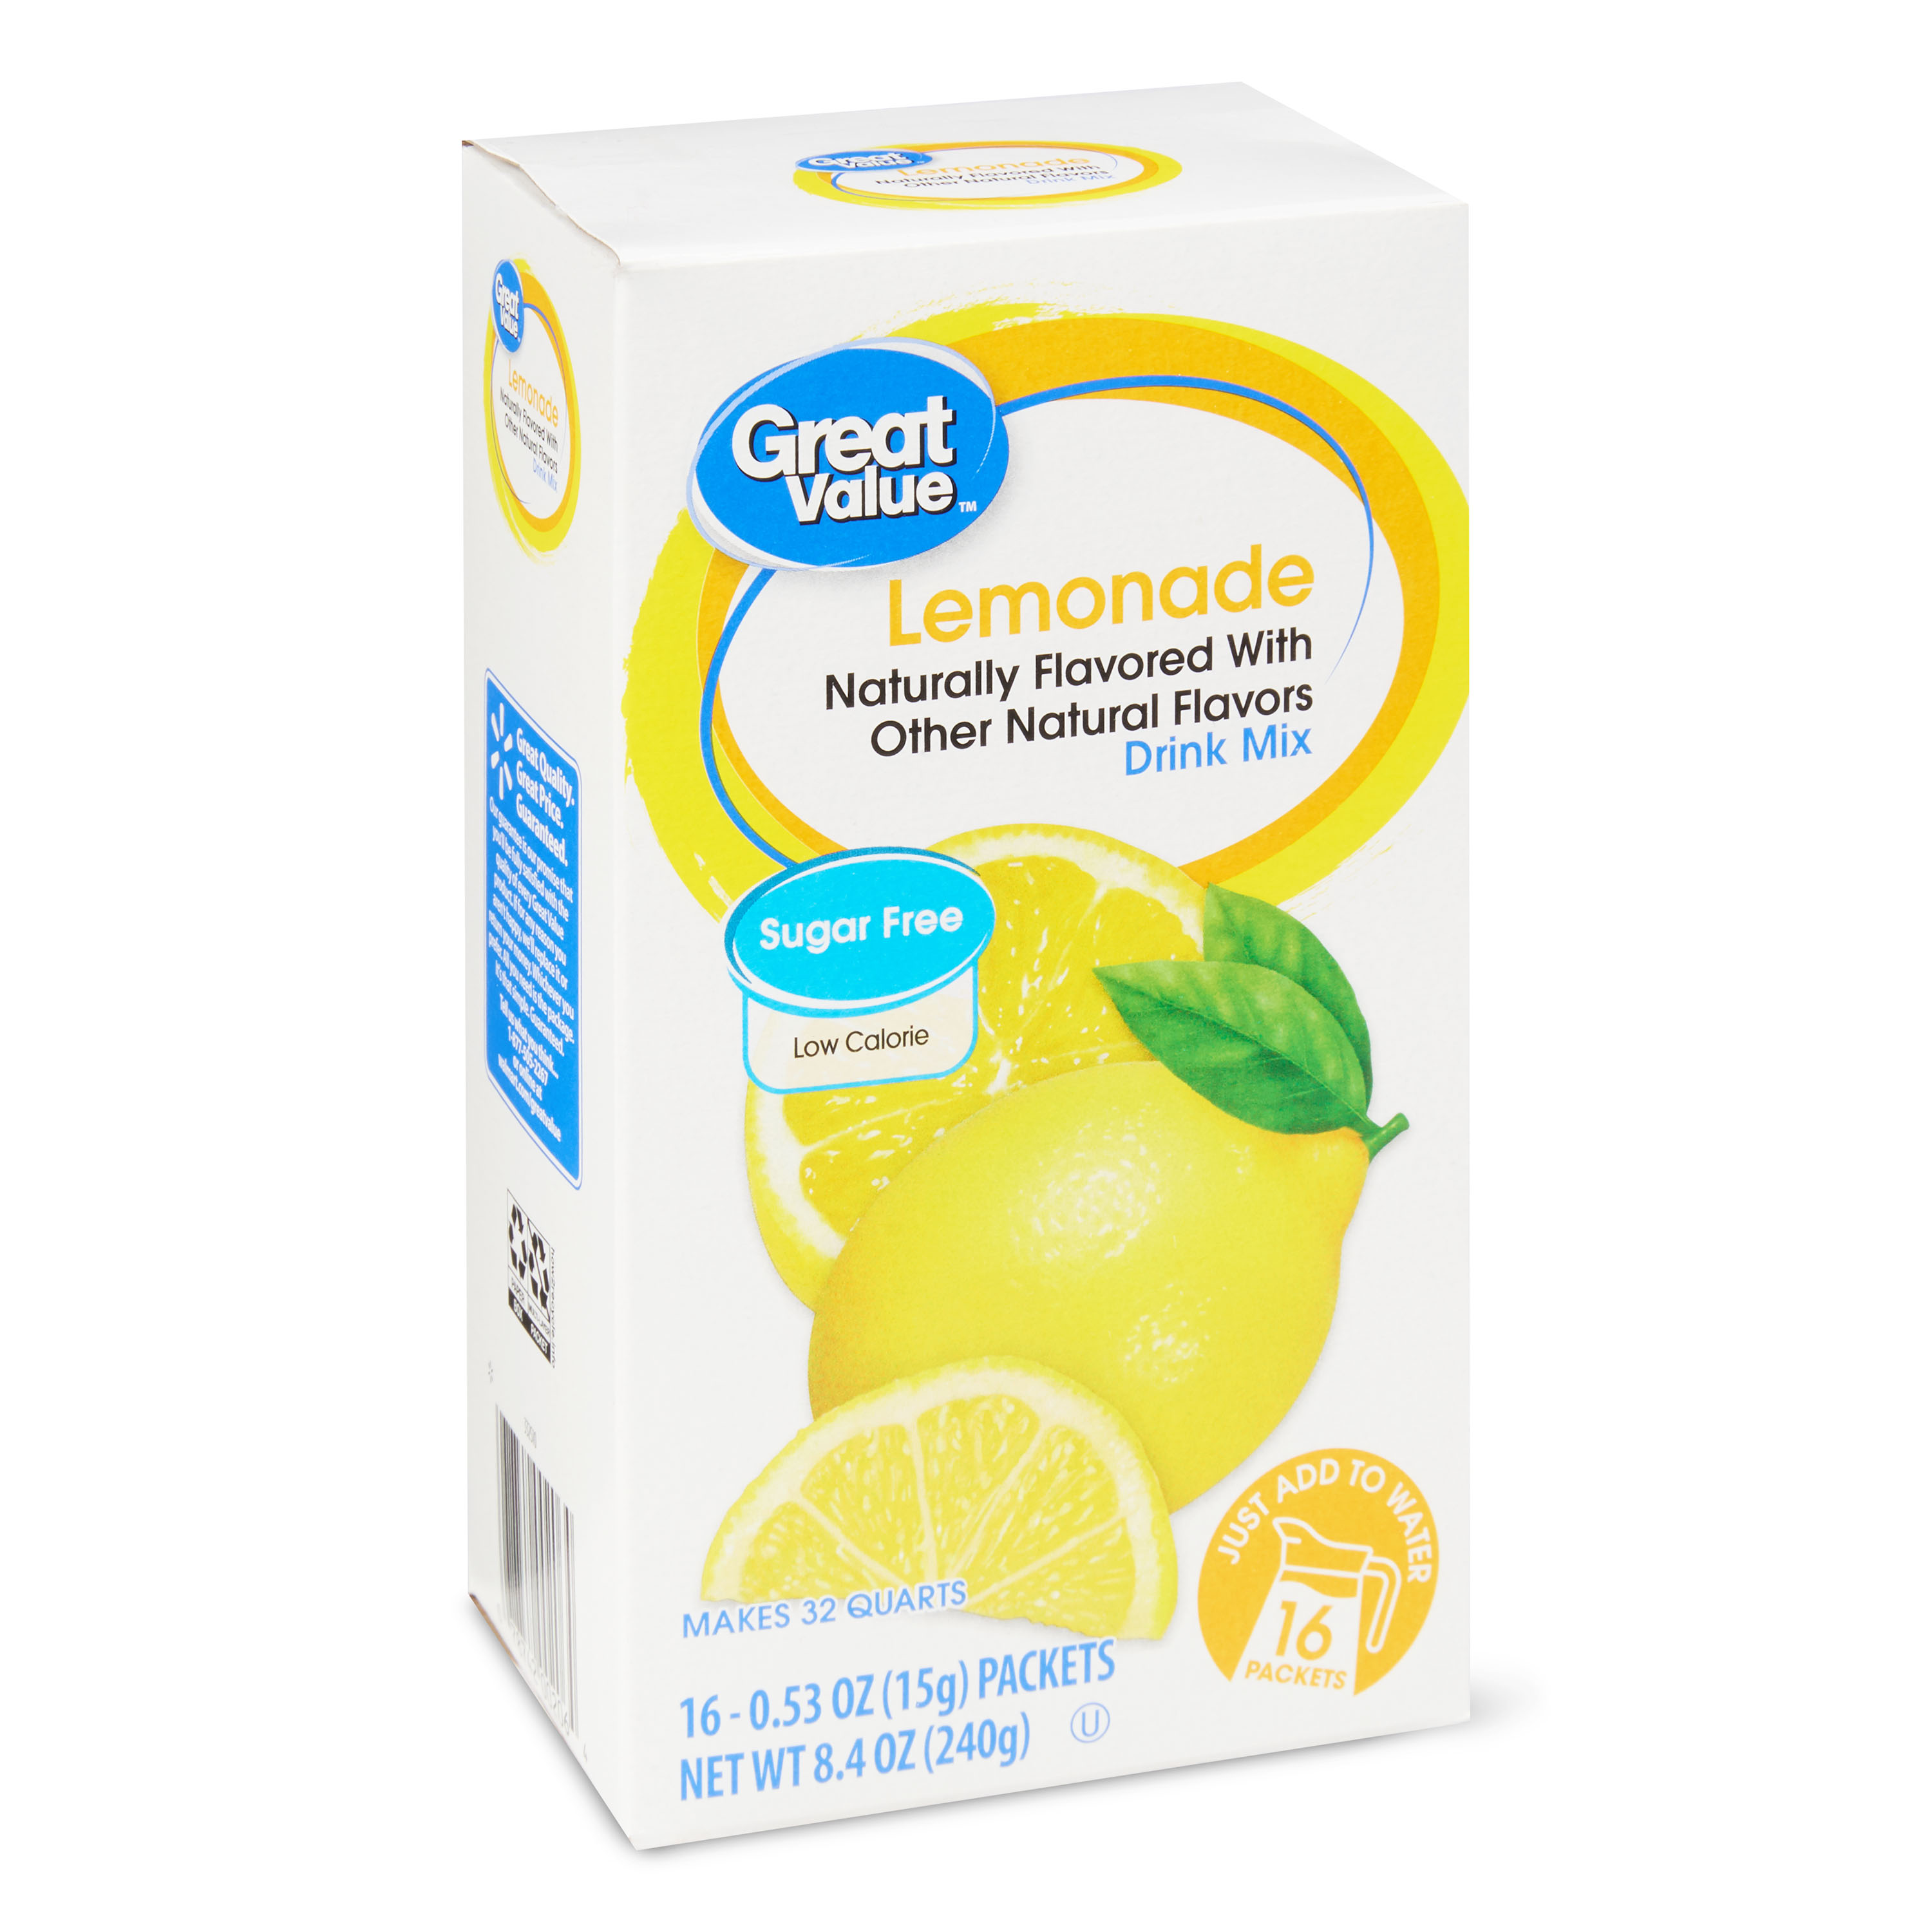 Great Value Sugar-Free Lemonade Drink Mix, 0.53 Oz, 16 Count